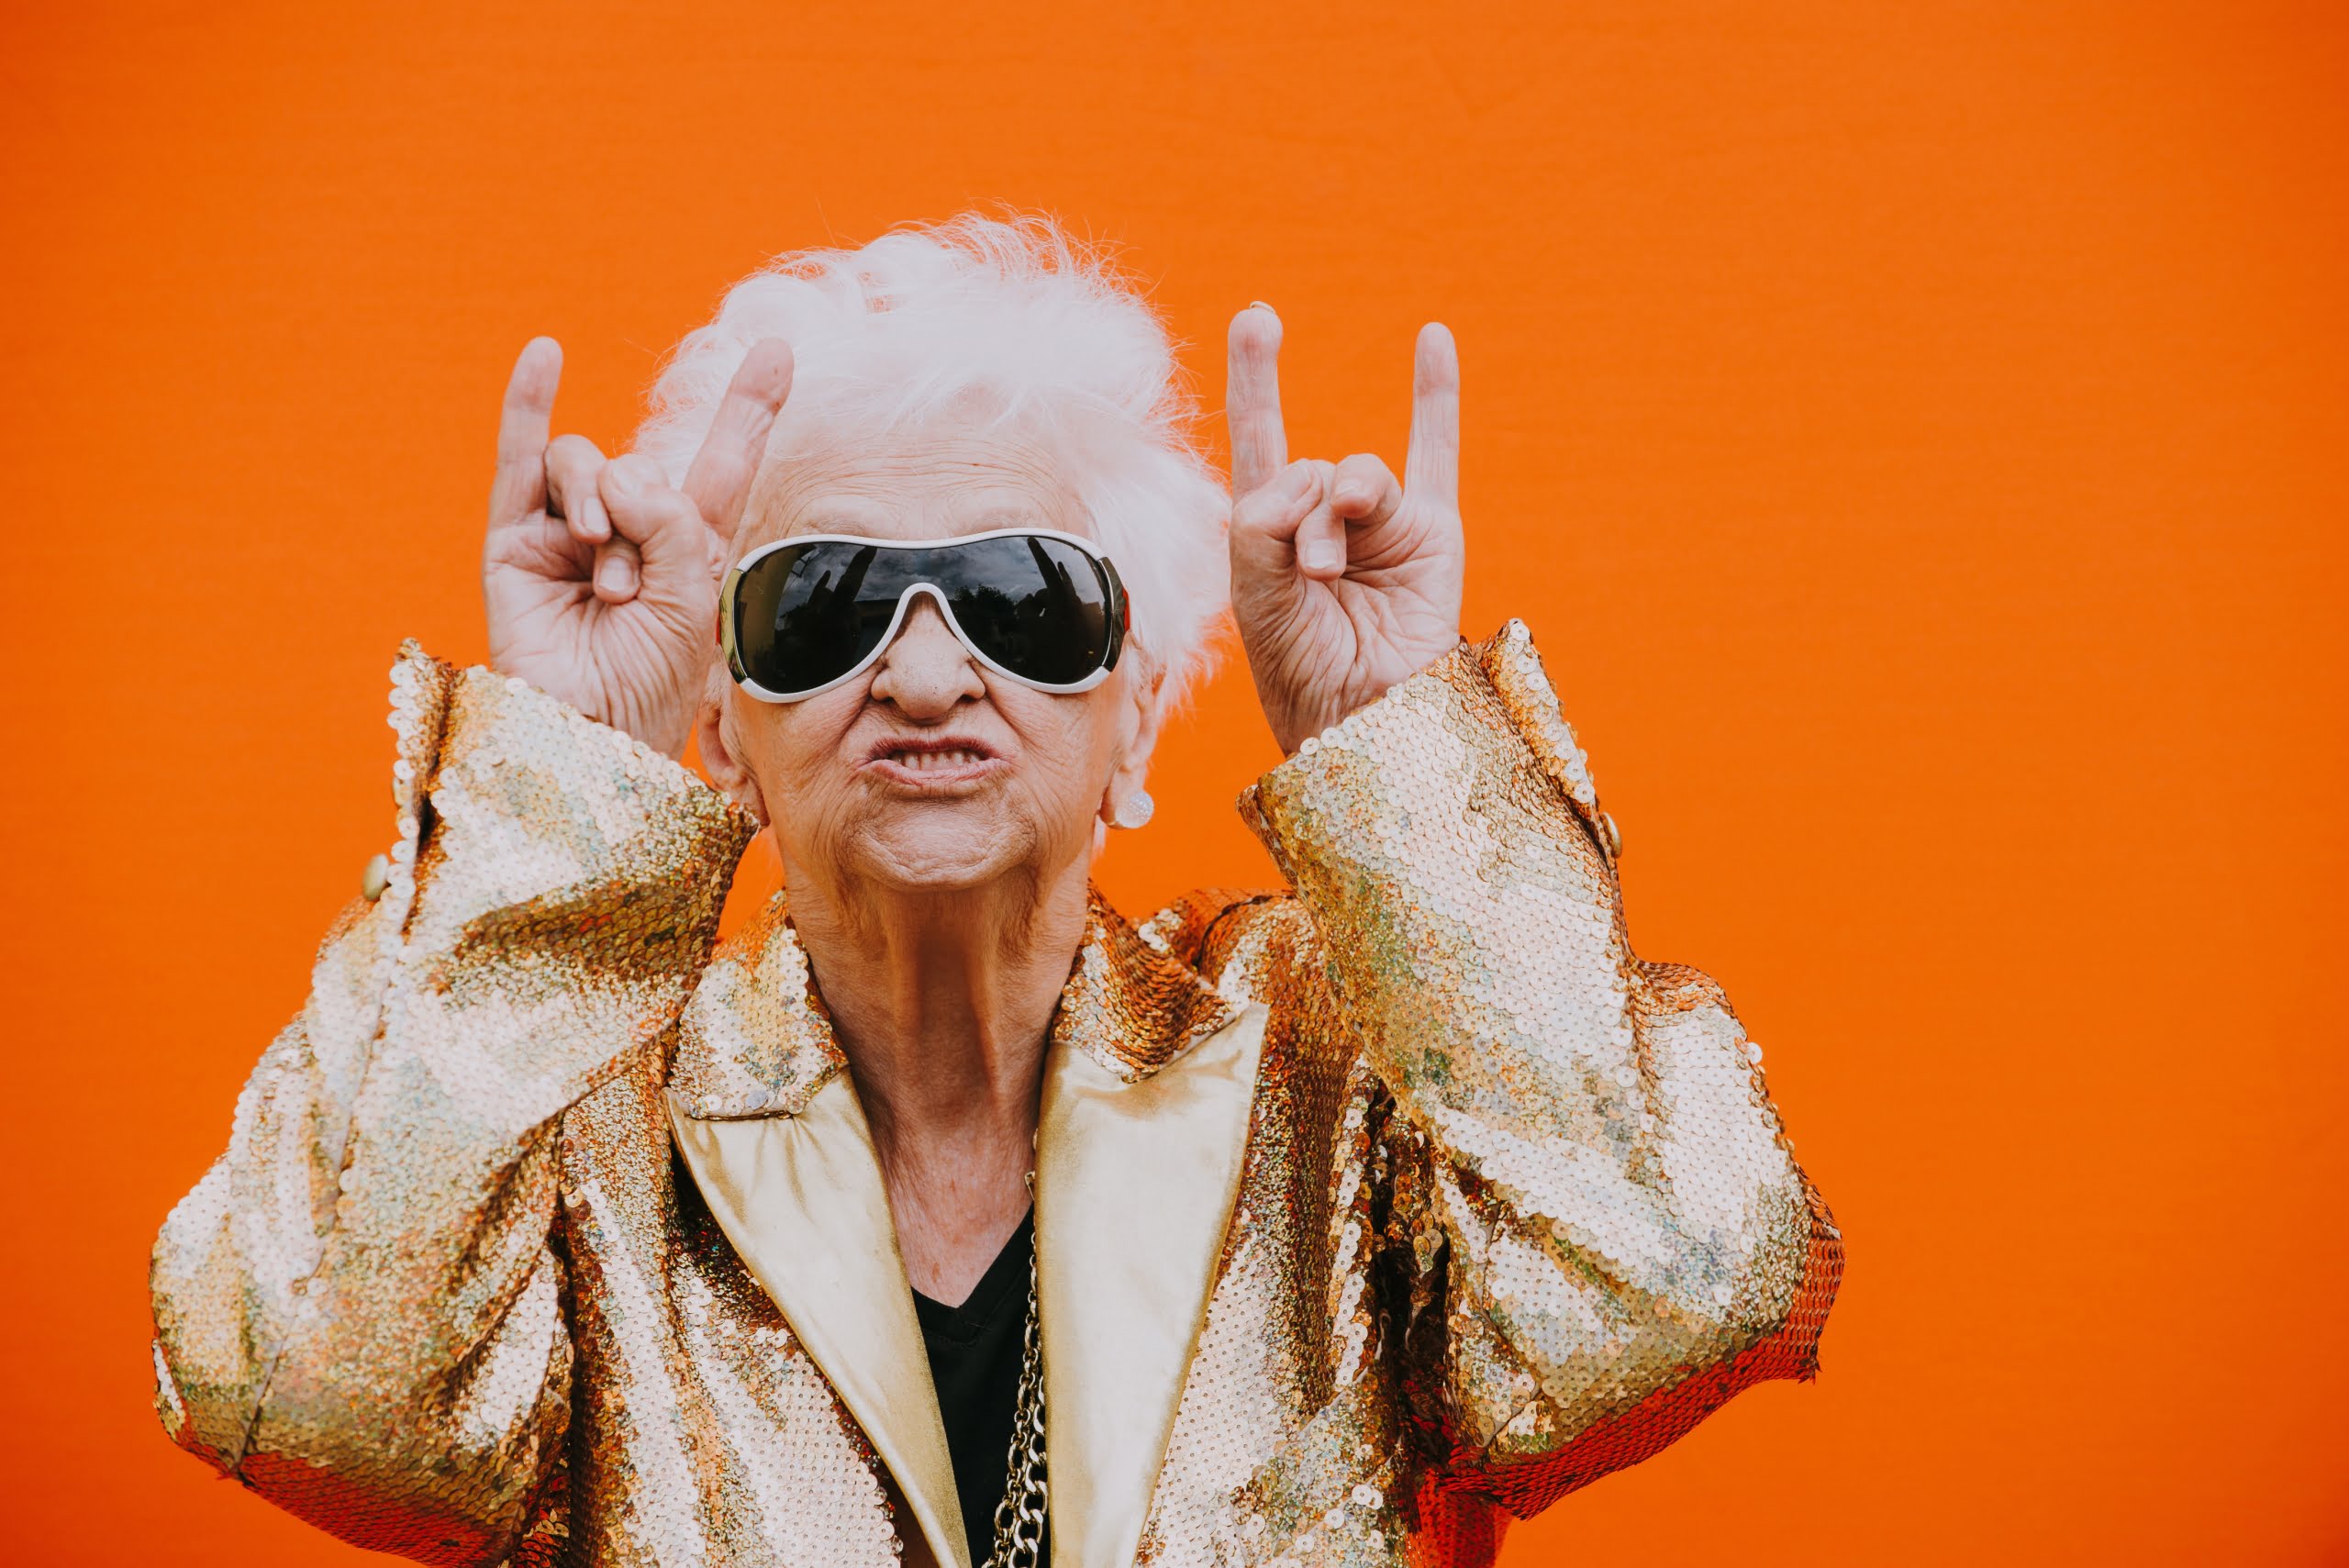 rock and roll grandma wearing sunglasses, gold jacket